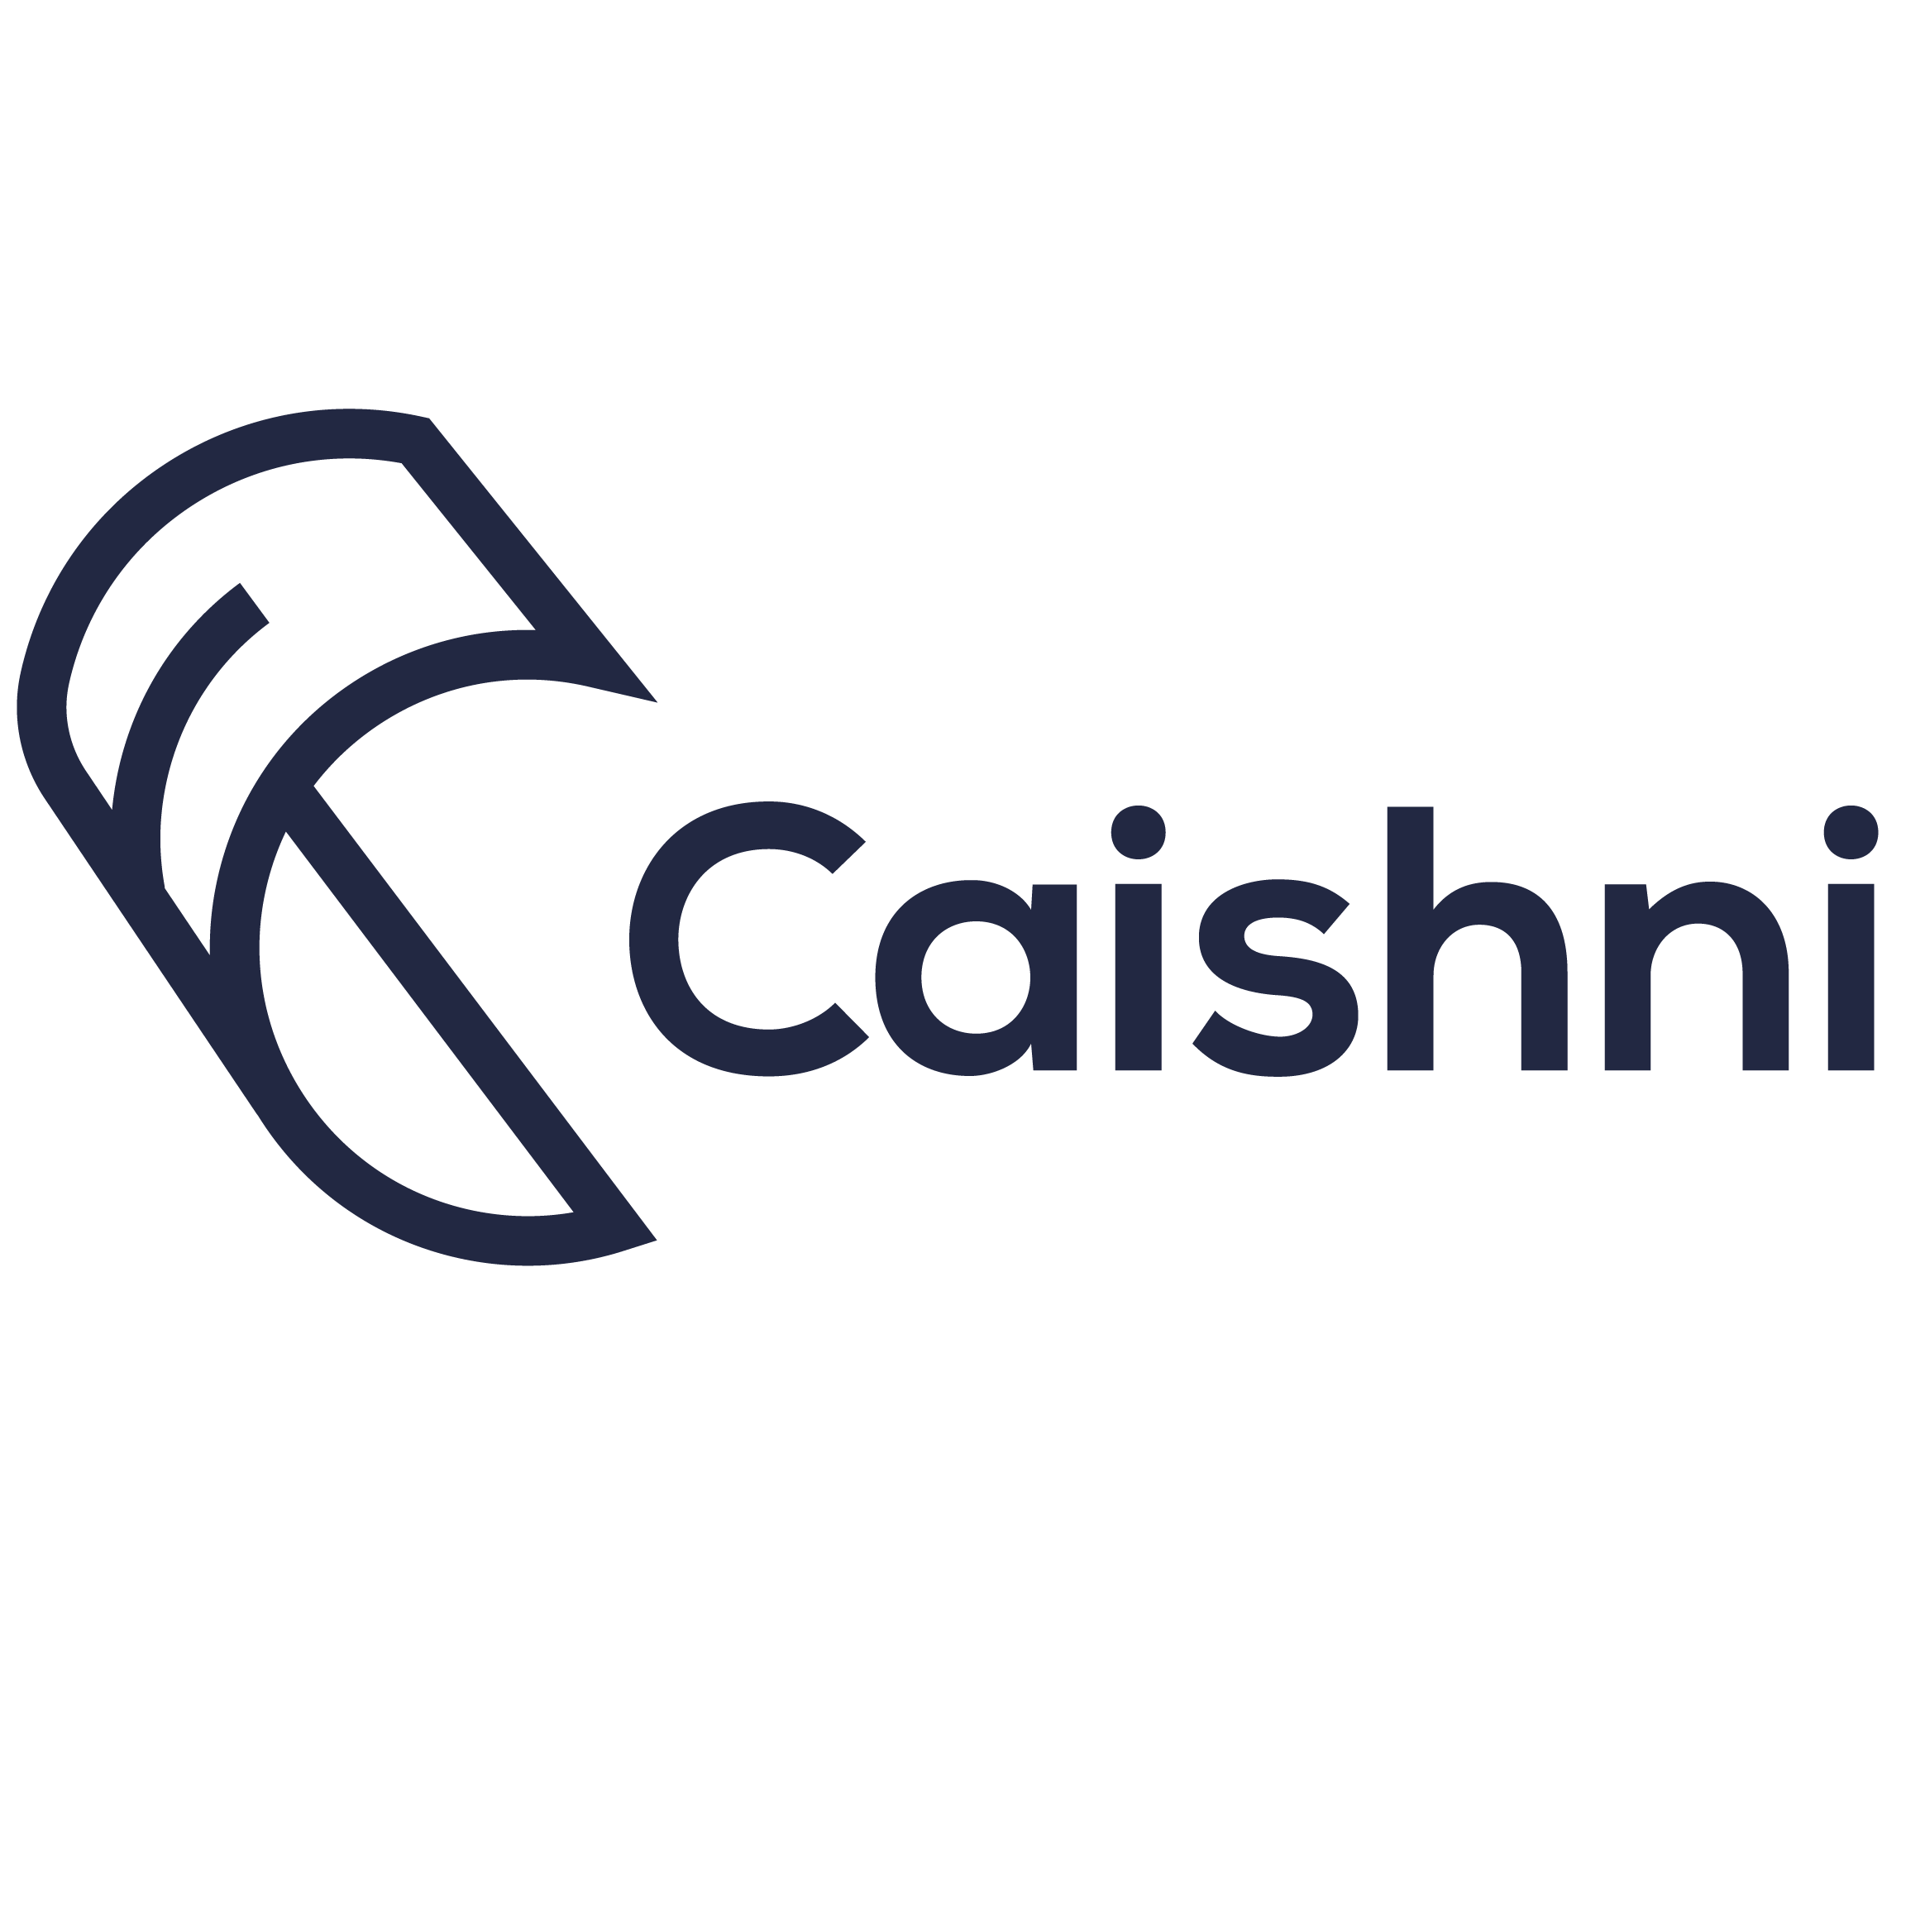 Caishni